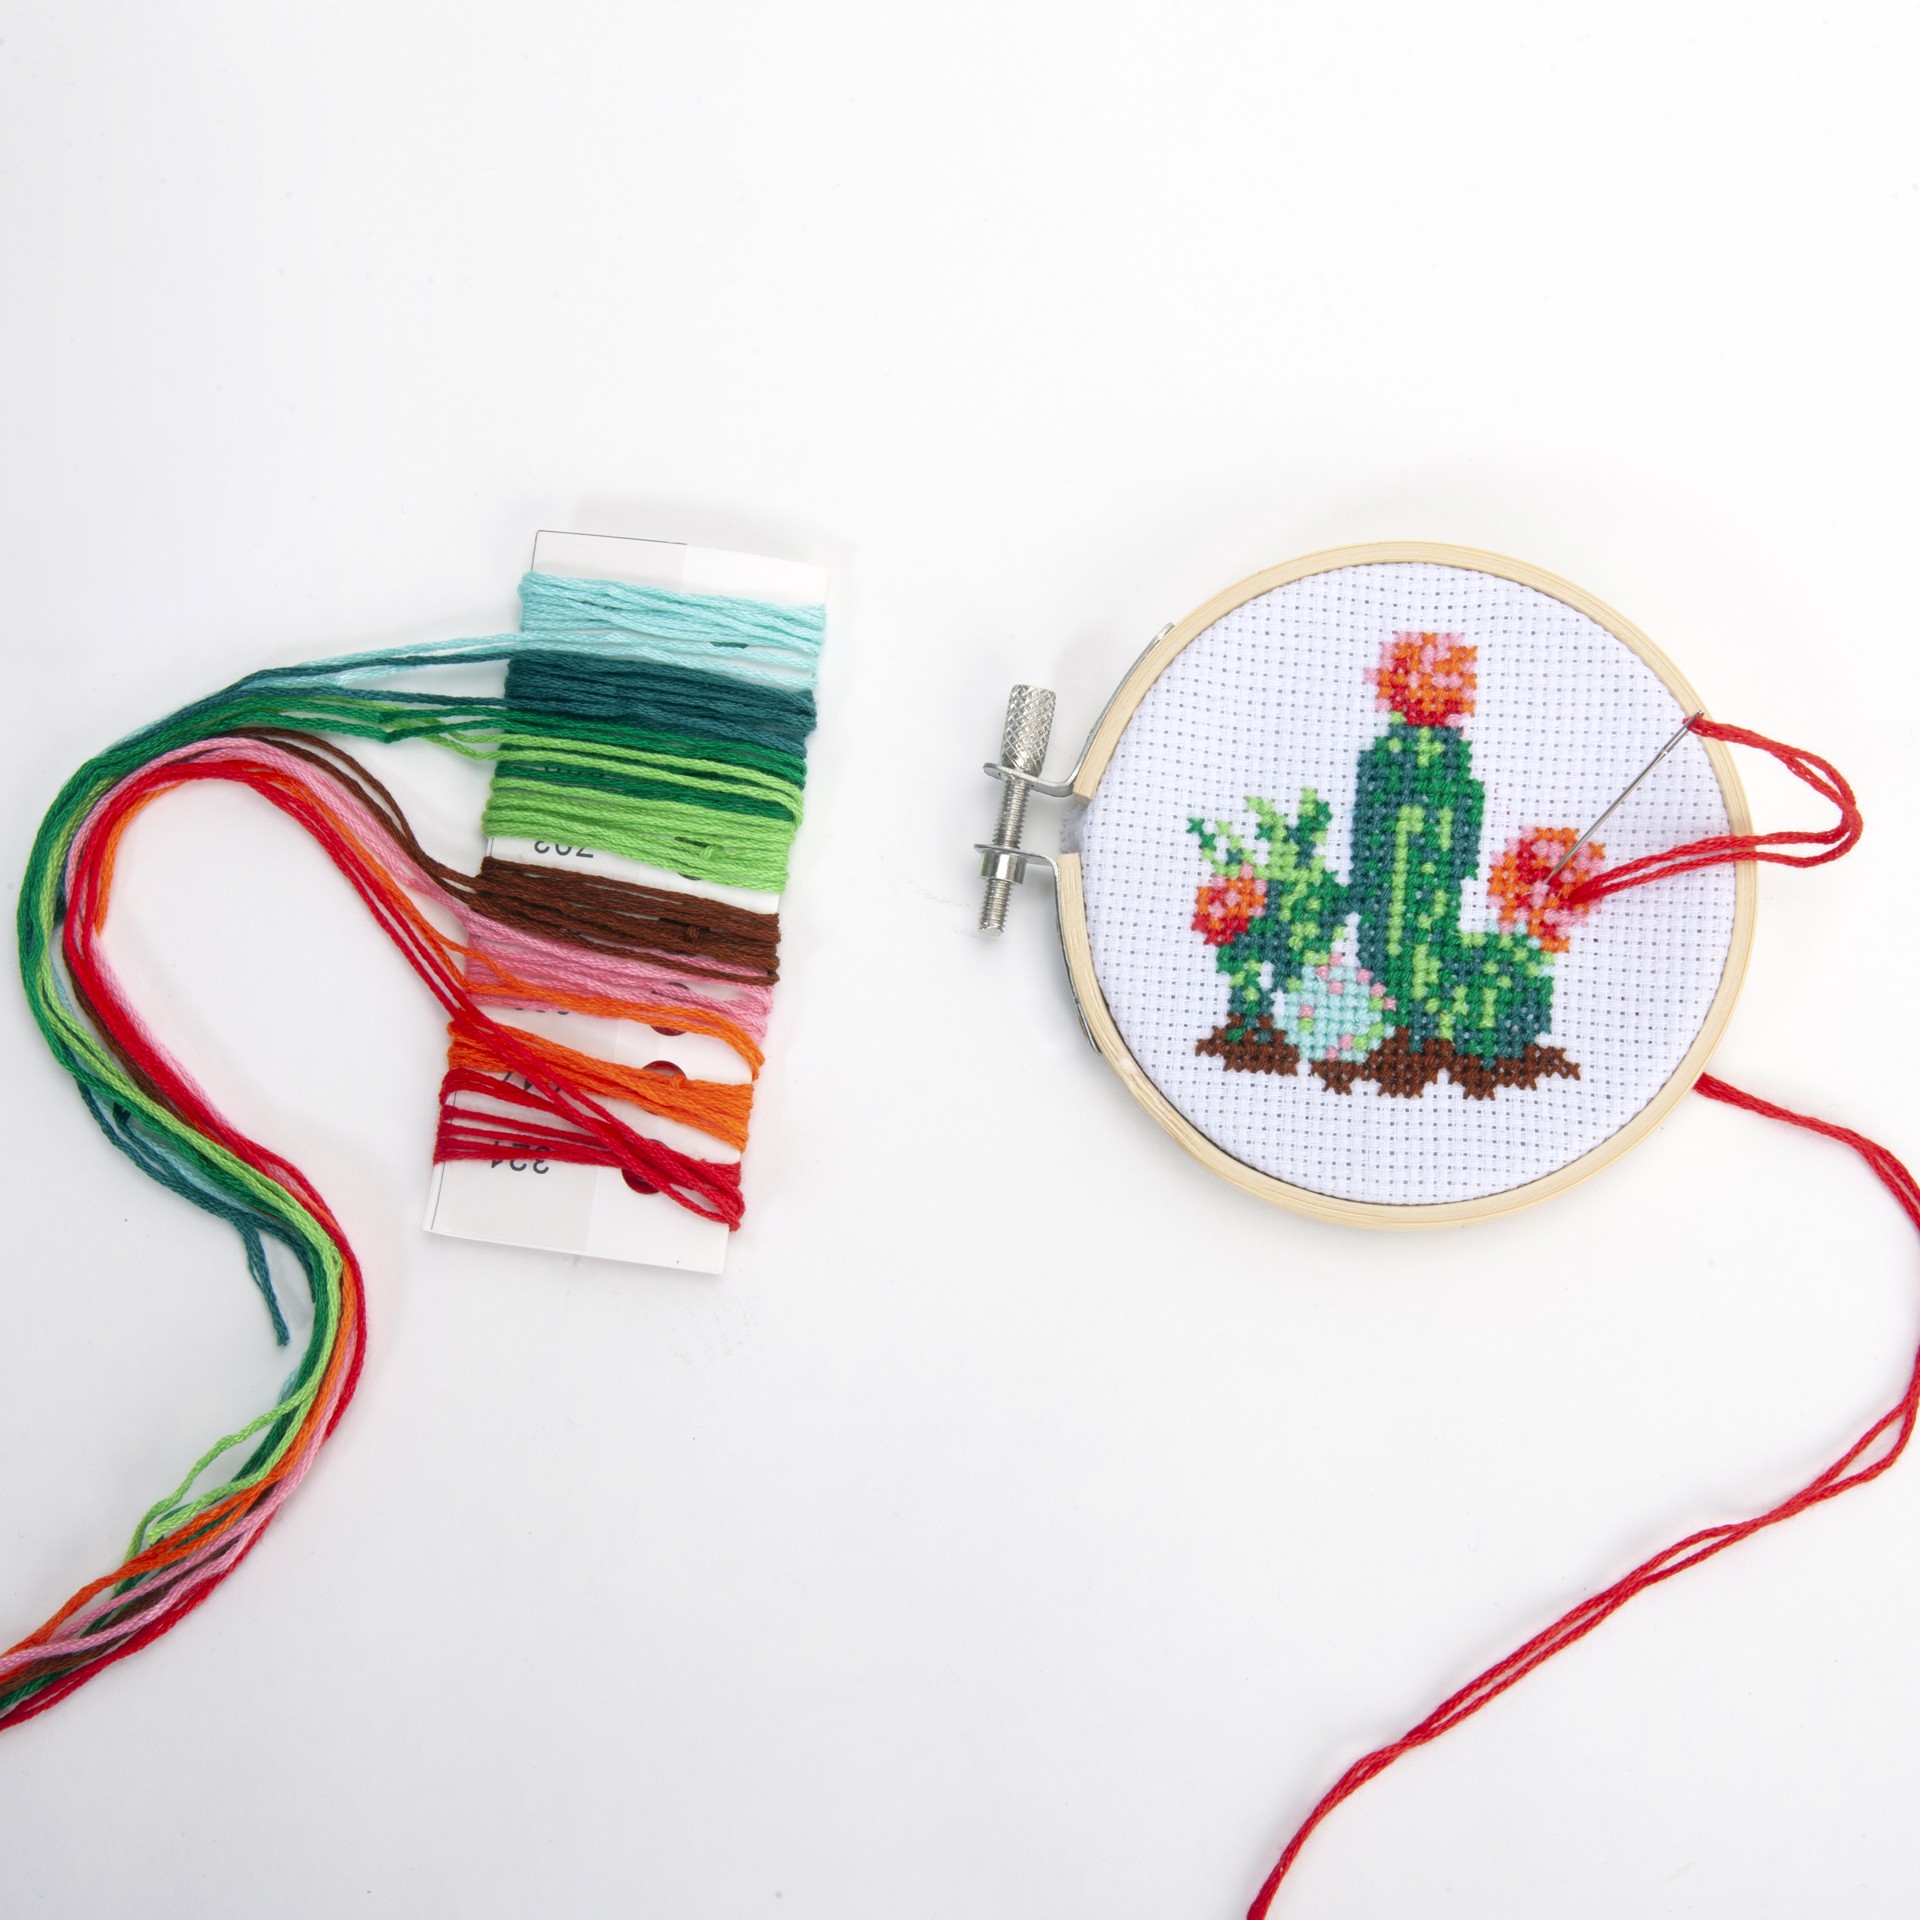 Mini Cross Stitch Kit - Cactus by Chauvet Arts